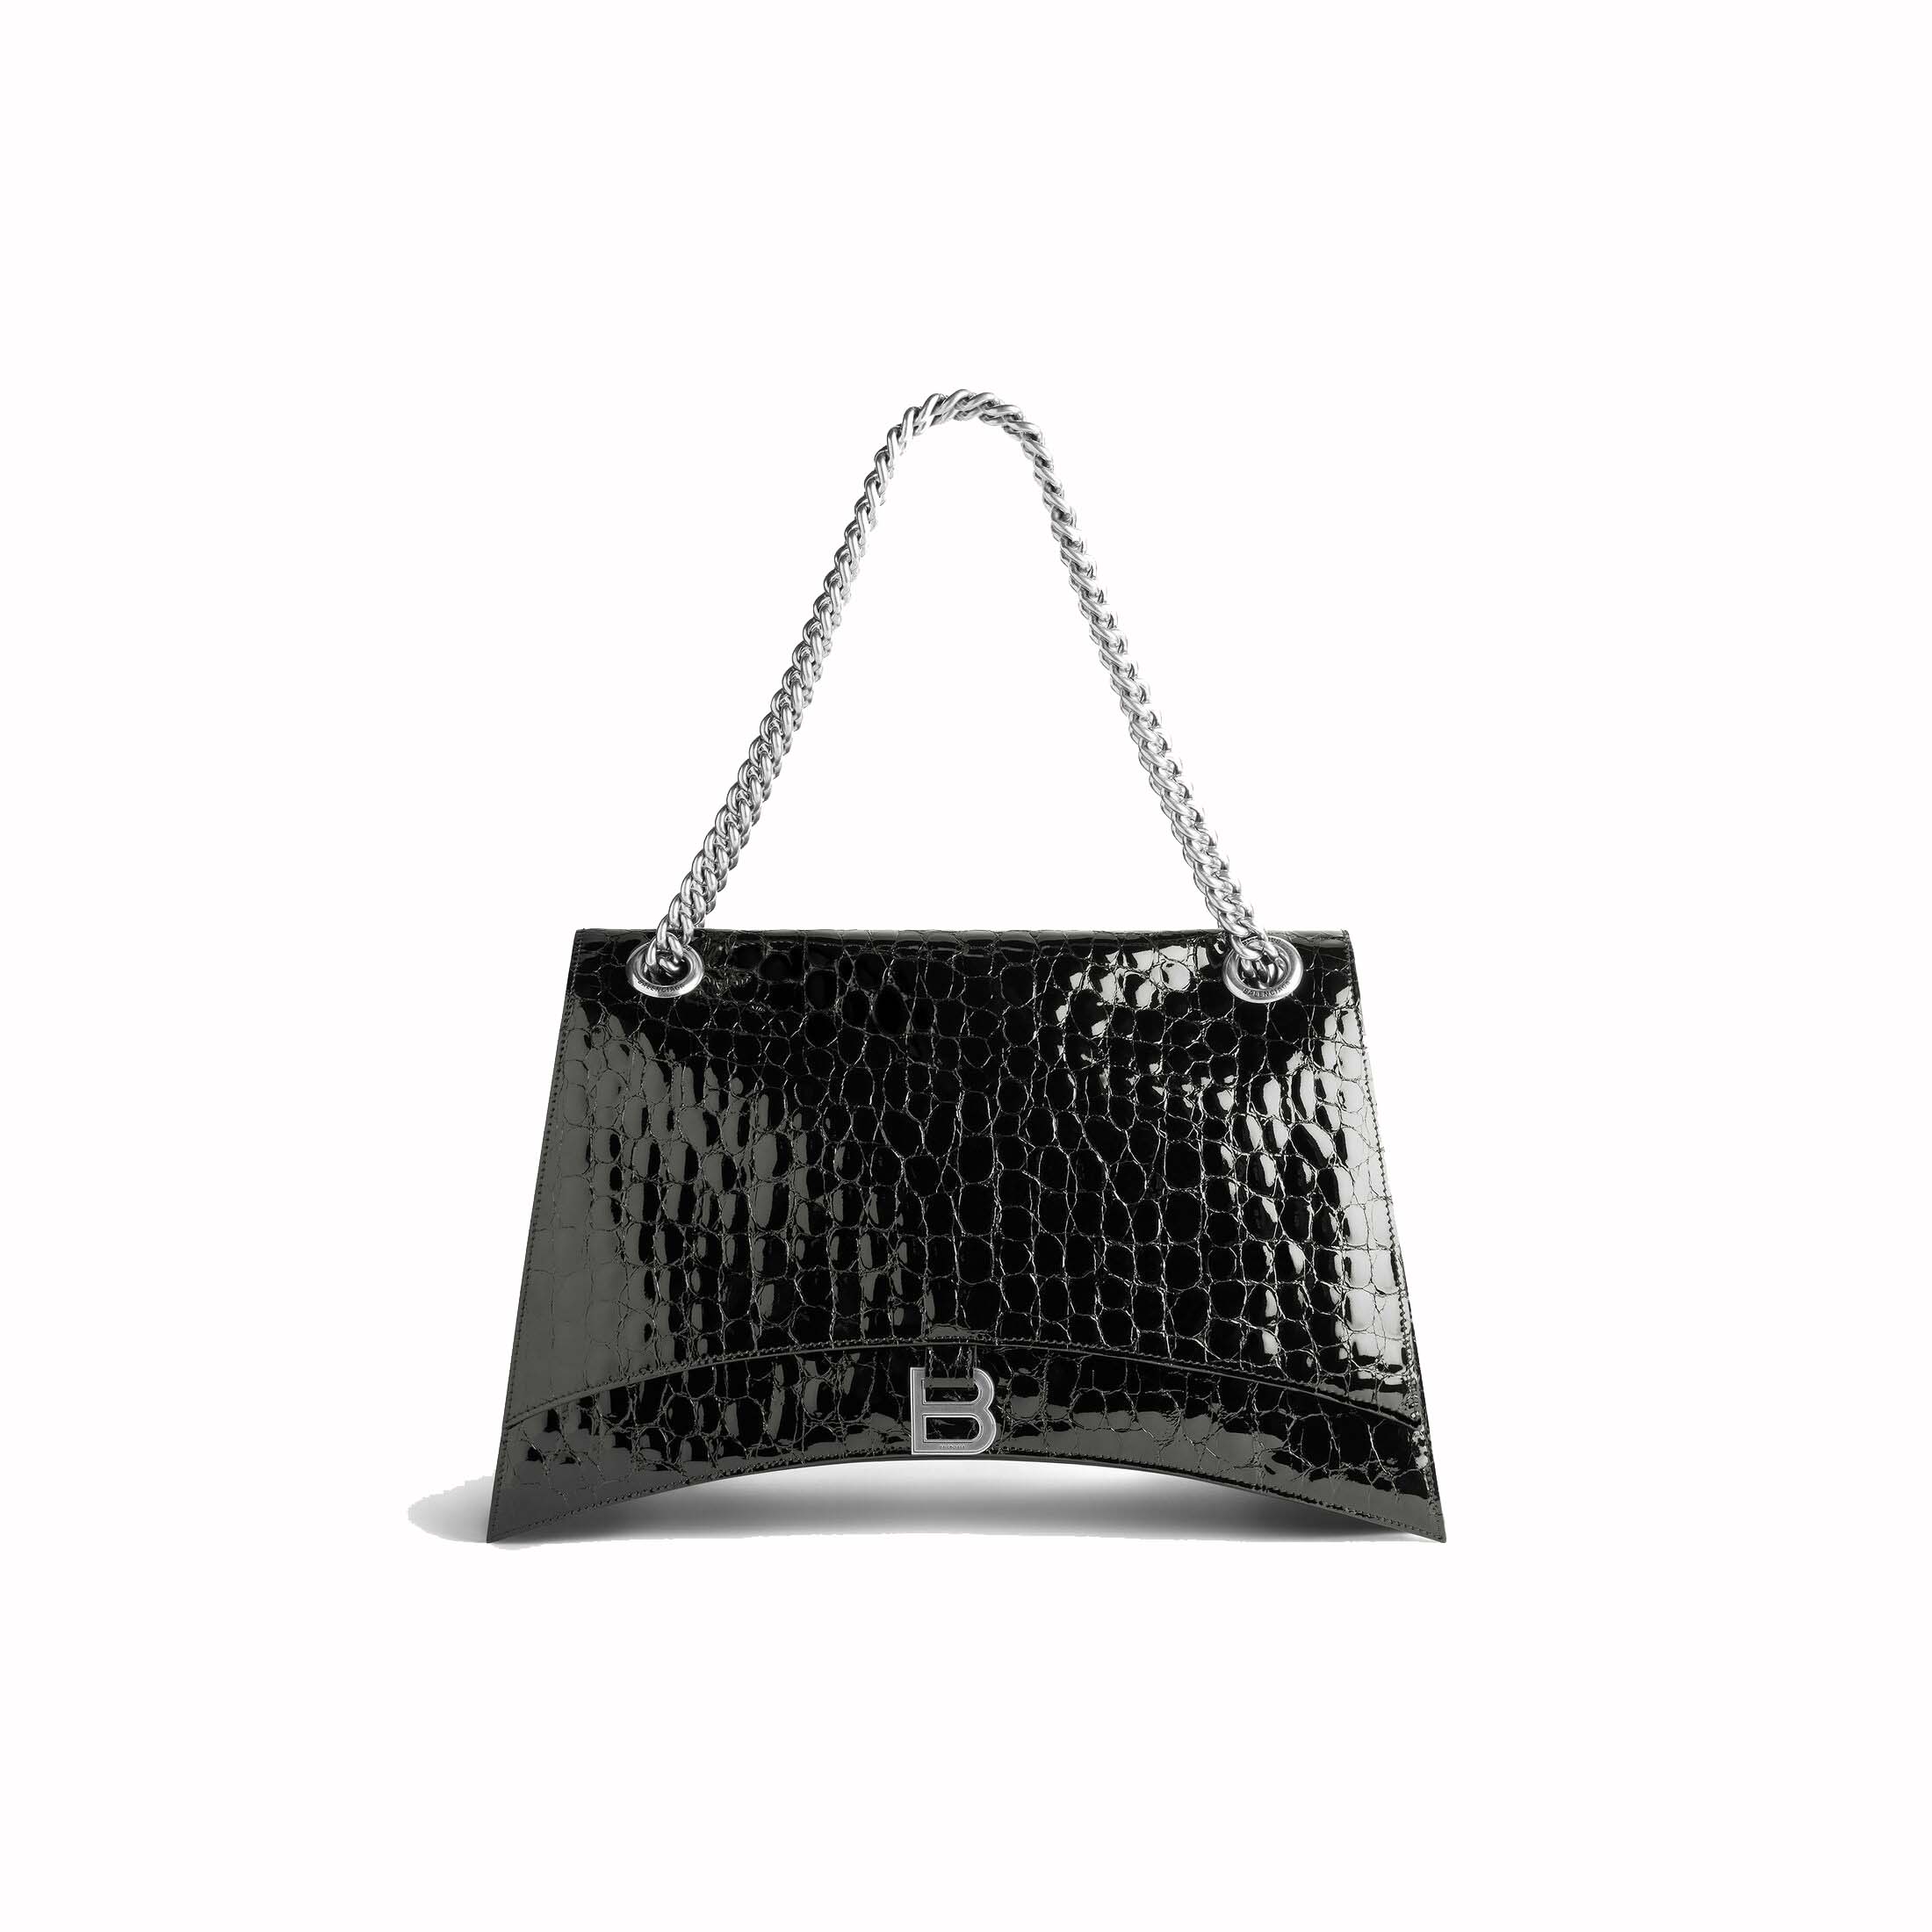 Balenciaga Crush Crocodile Medium Chain Bag Black in Leather with